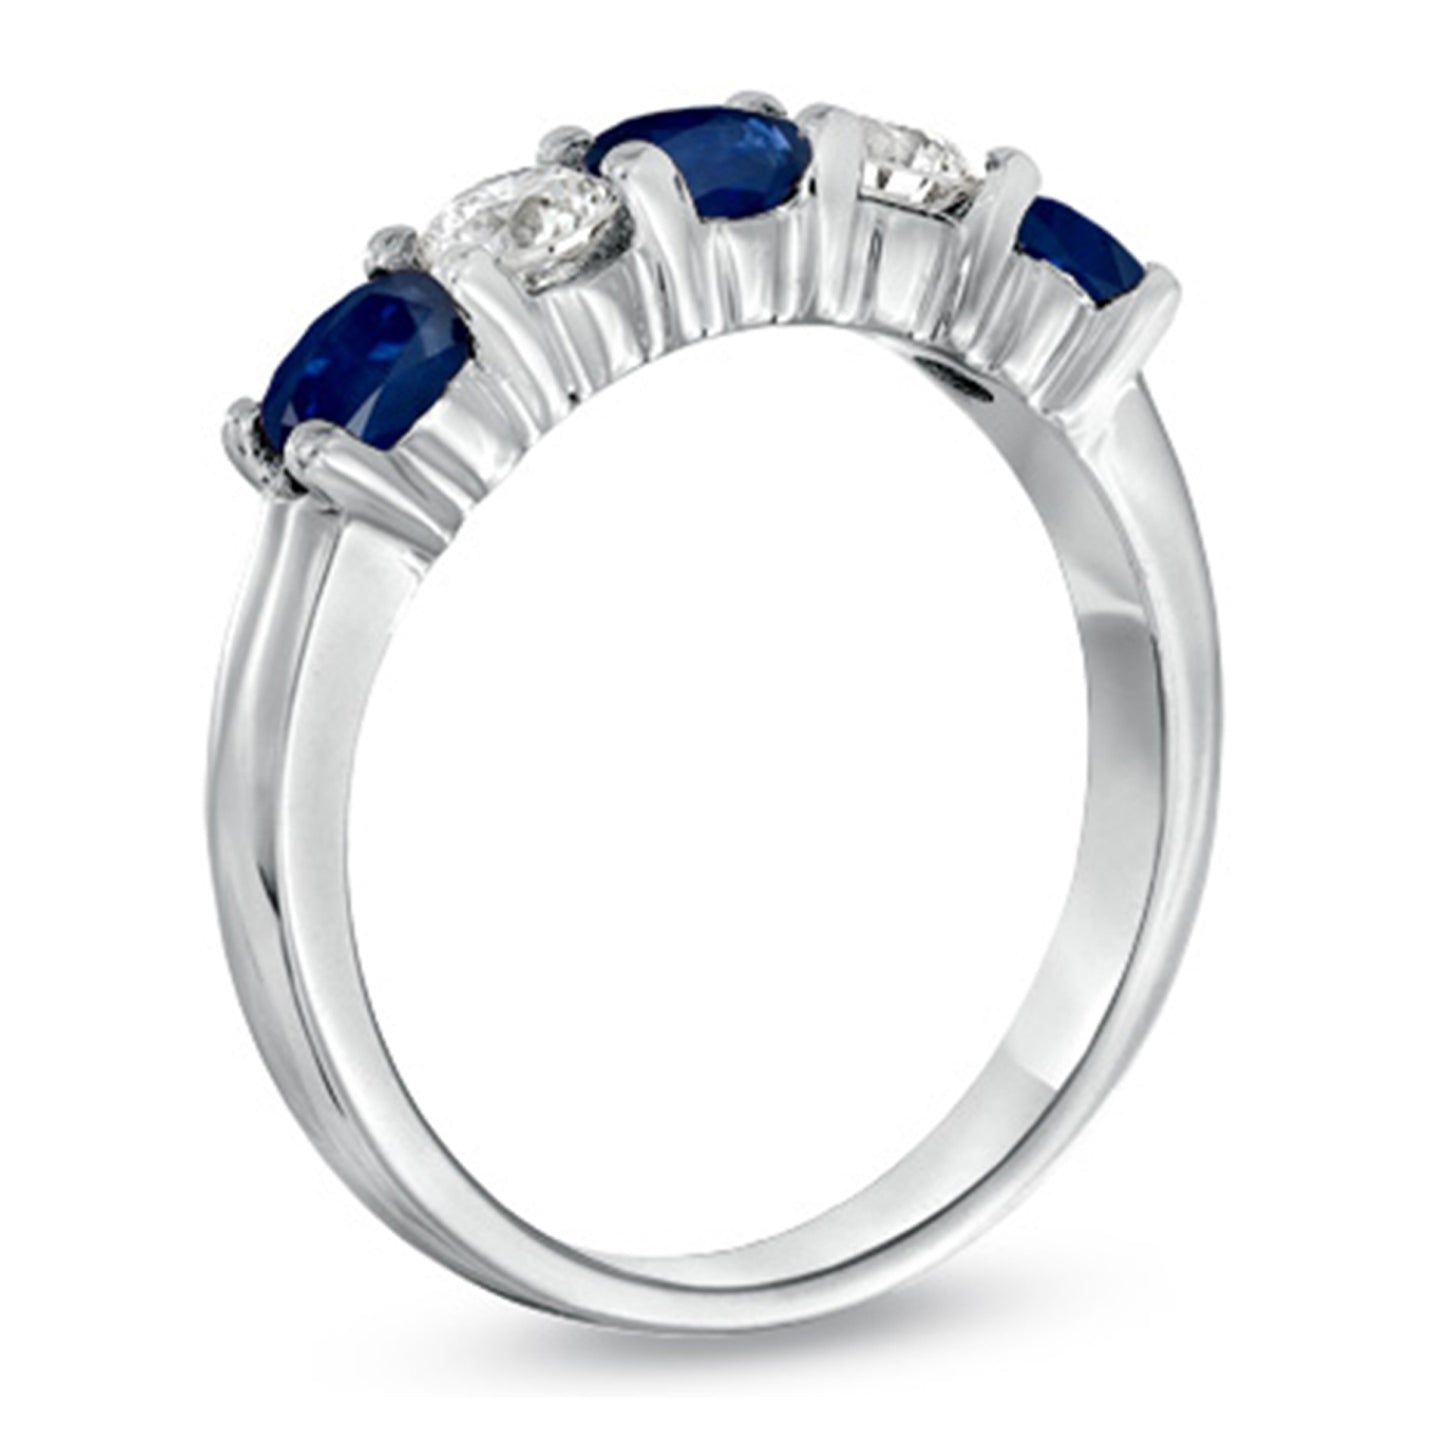 1 1/4ct Blue Sapphire & Diamond Ring in 14k White Gold